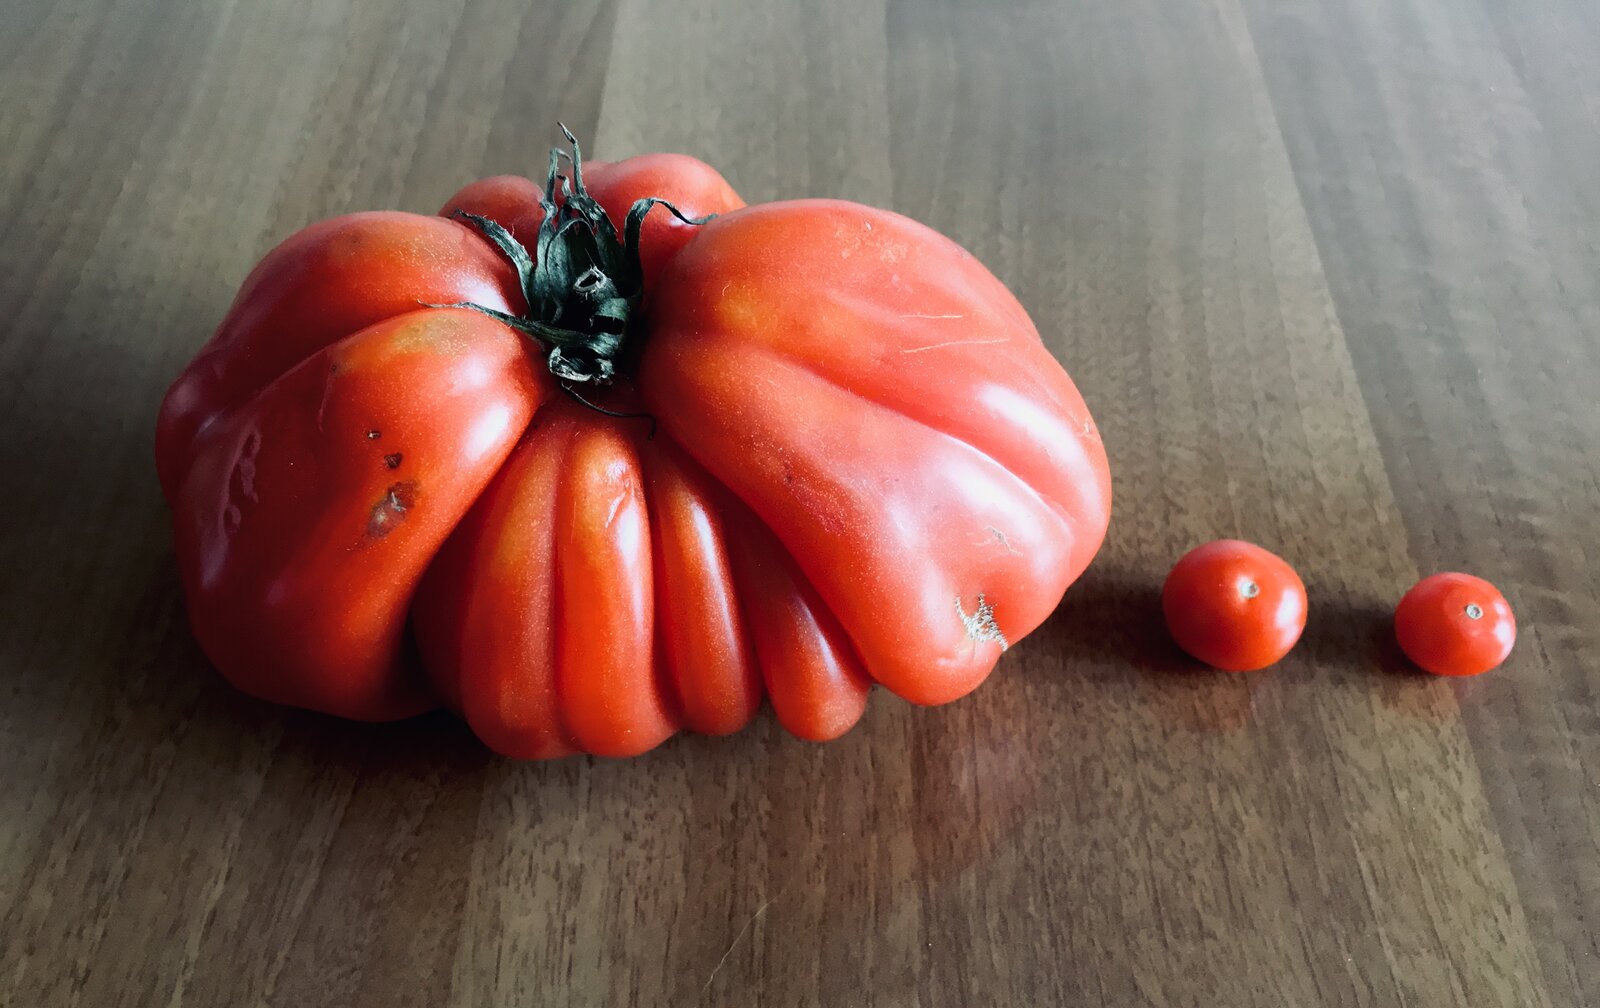 Tomatoes.jpeg